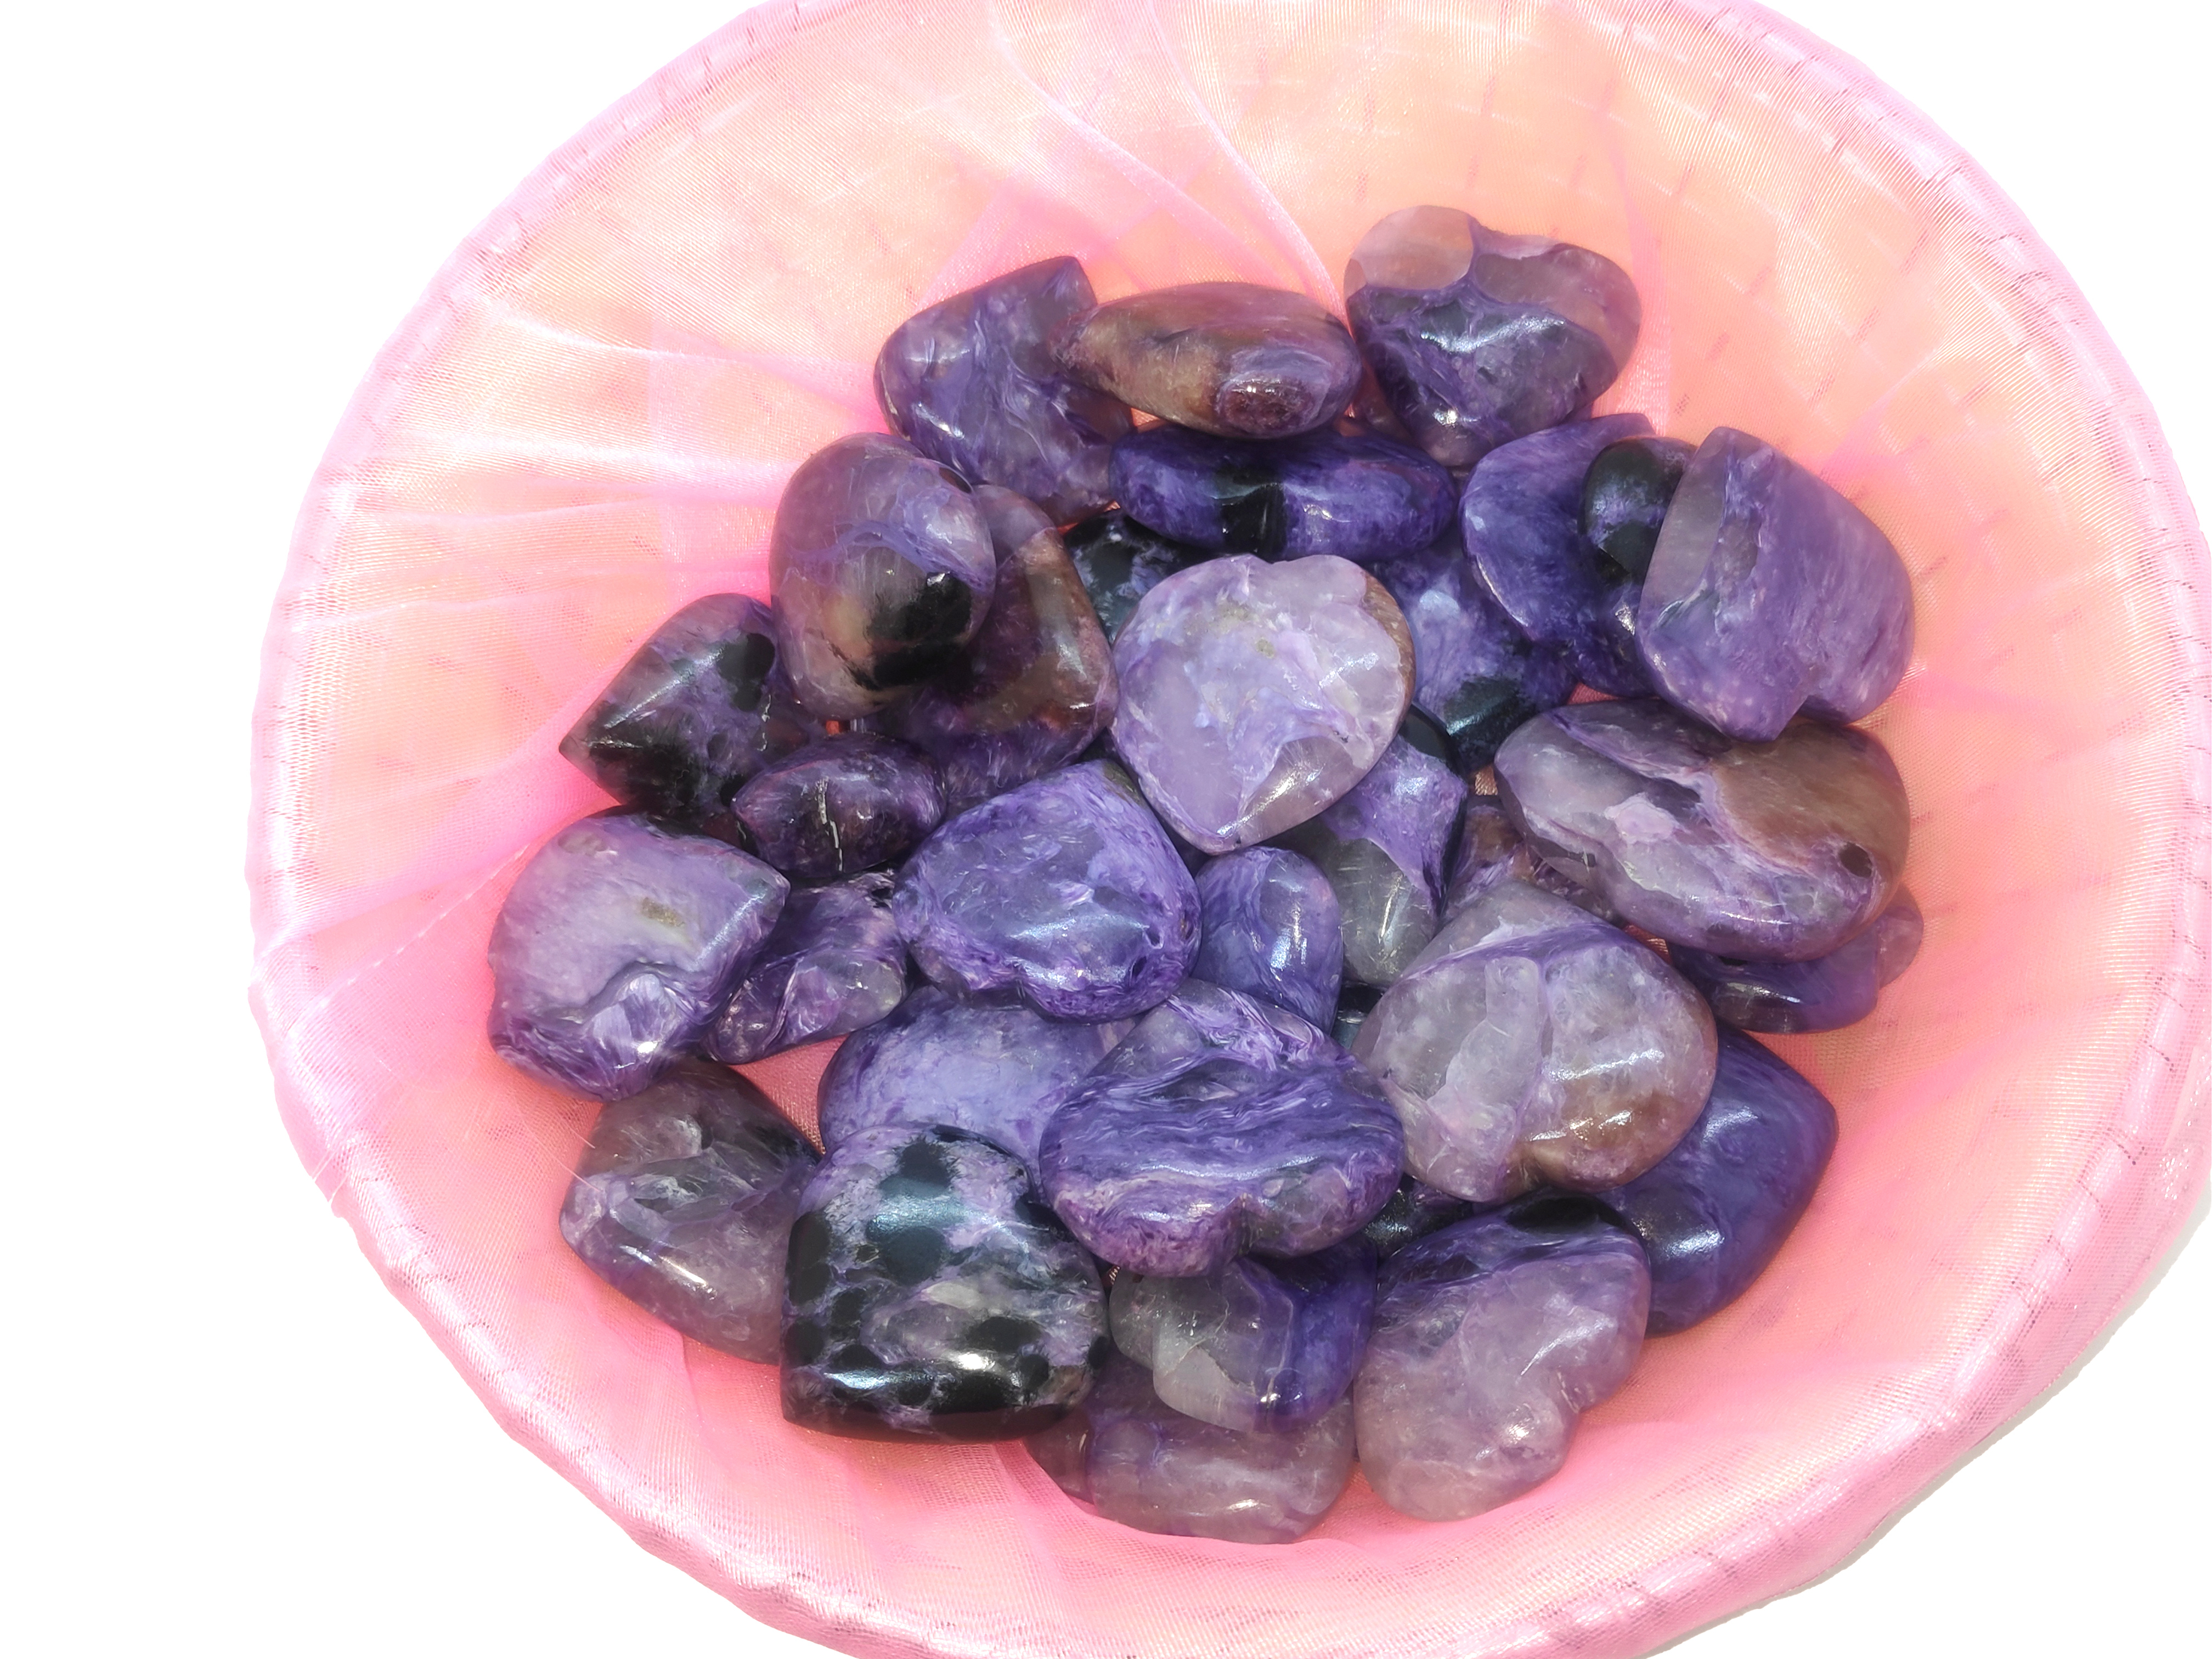 cahroite Hearts Gemstones